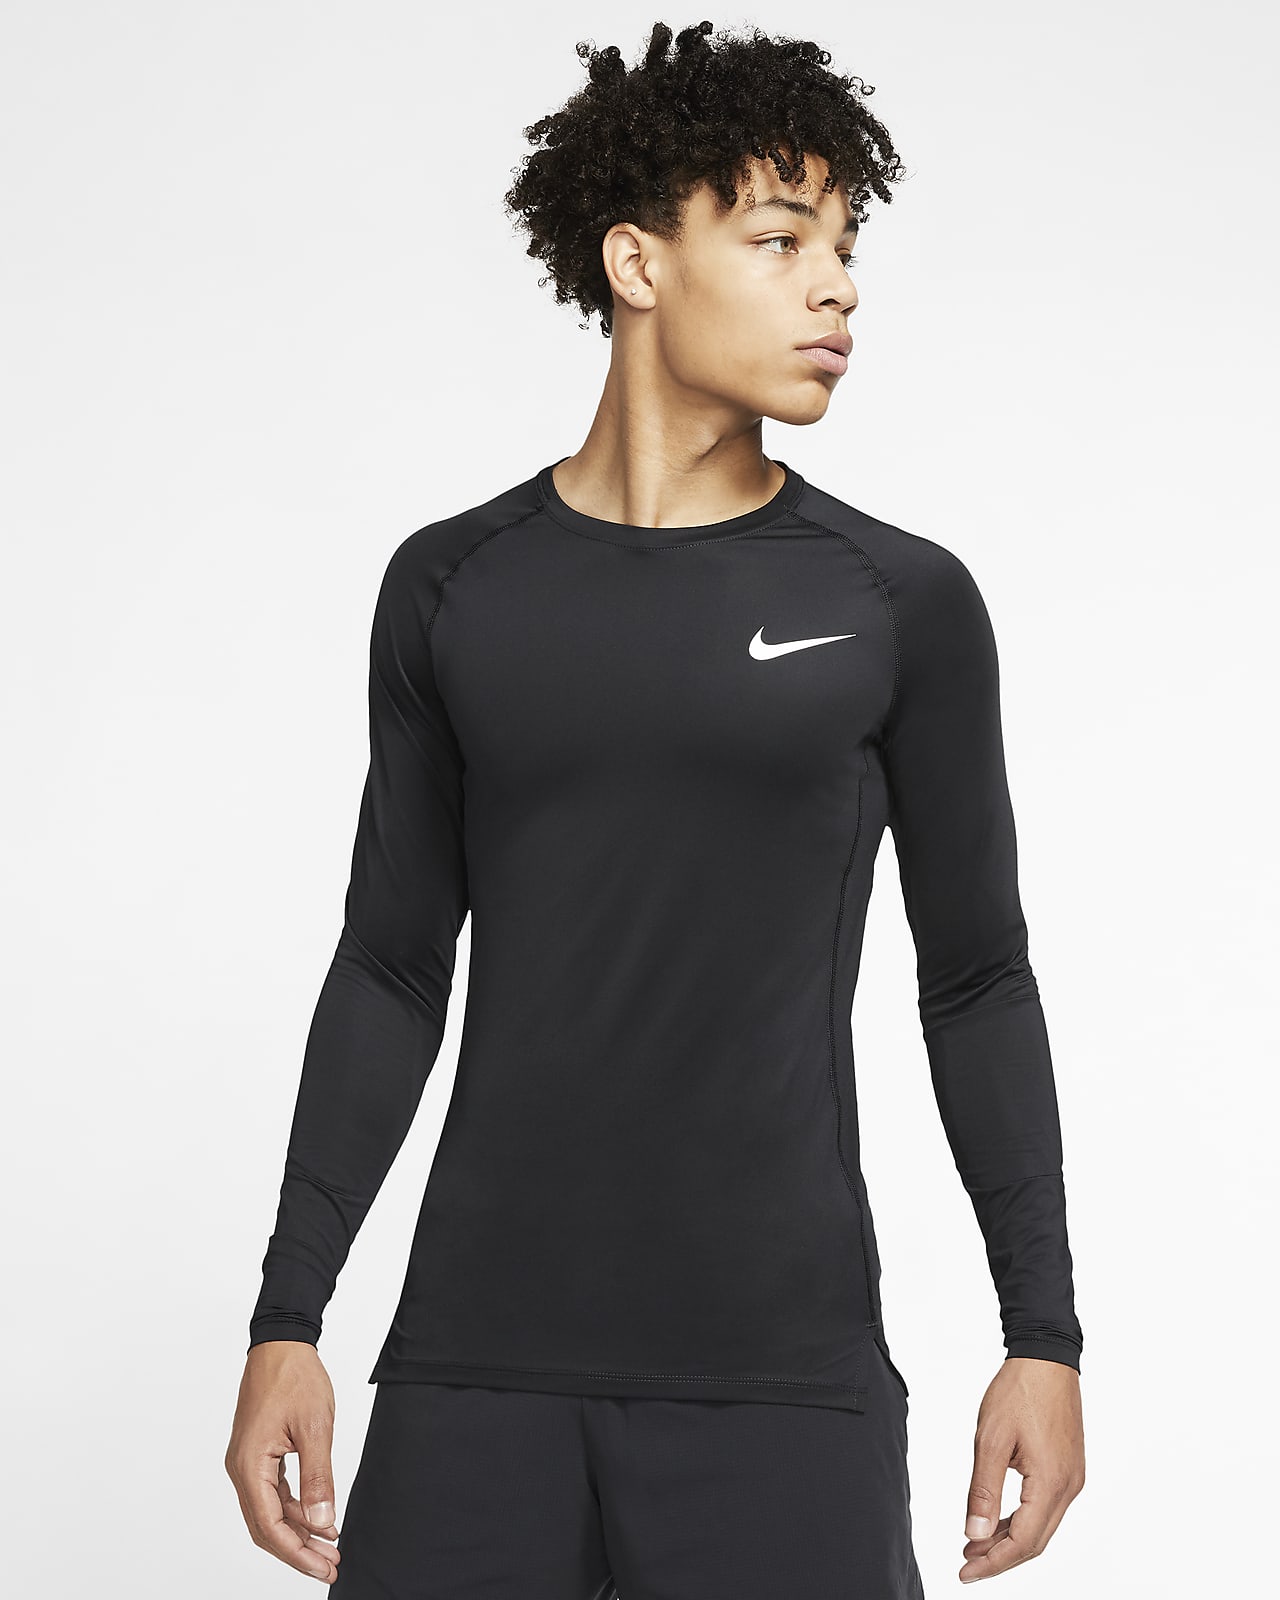 morgenmad fortvivlelse Konfrontere Nike Pro Men's Tight-Fit Long-Sleeve Top. Nike IN